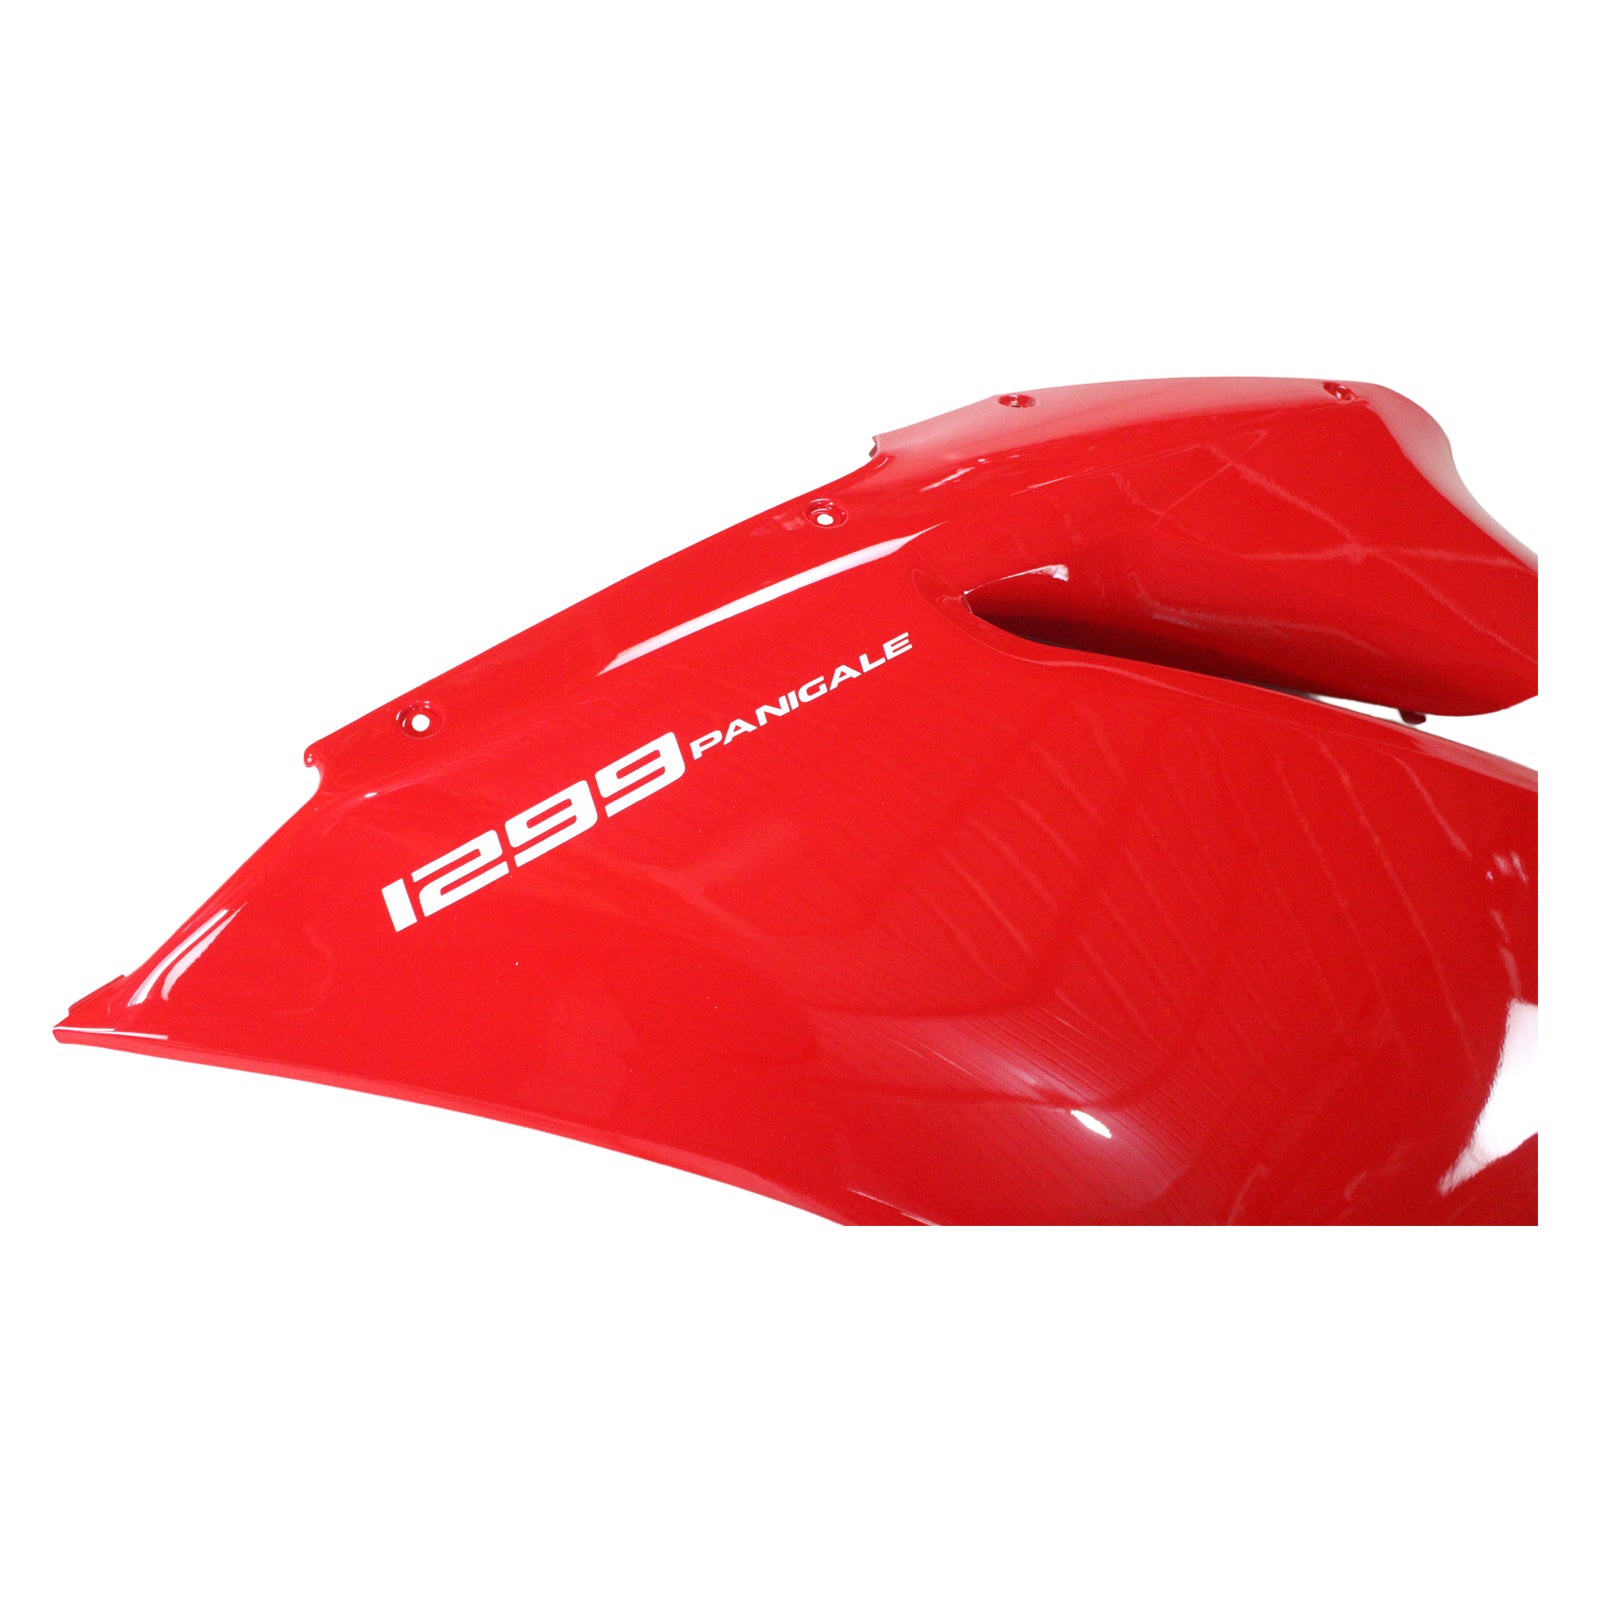 Amotopart Ducati 2015-2020 1299/959 All Red Fairing Kit